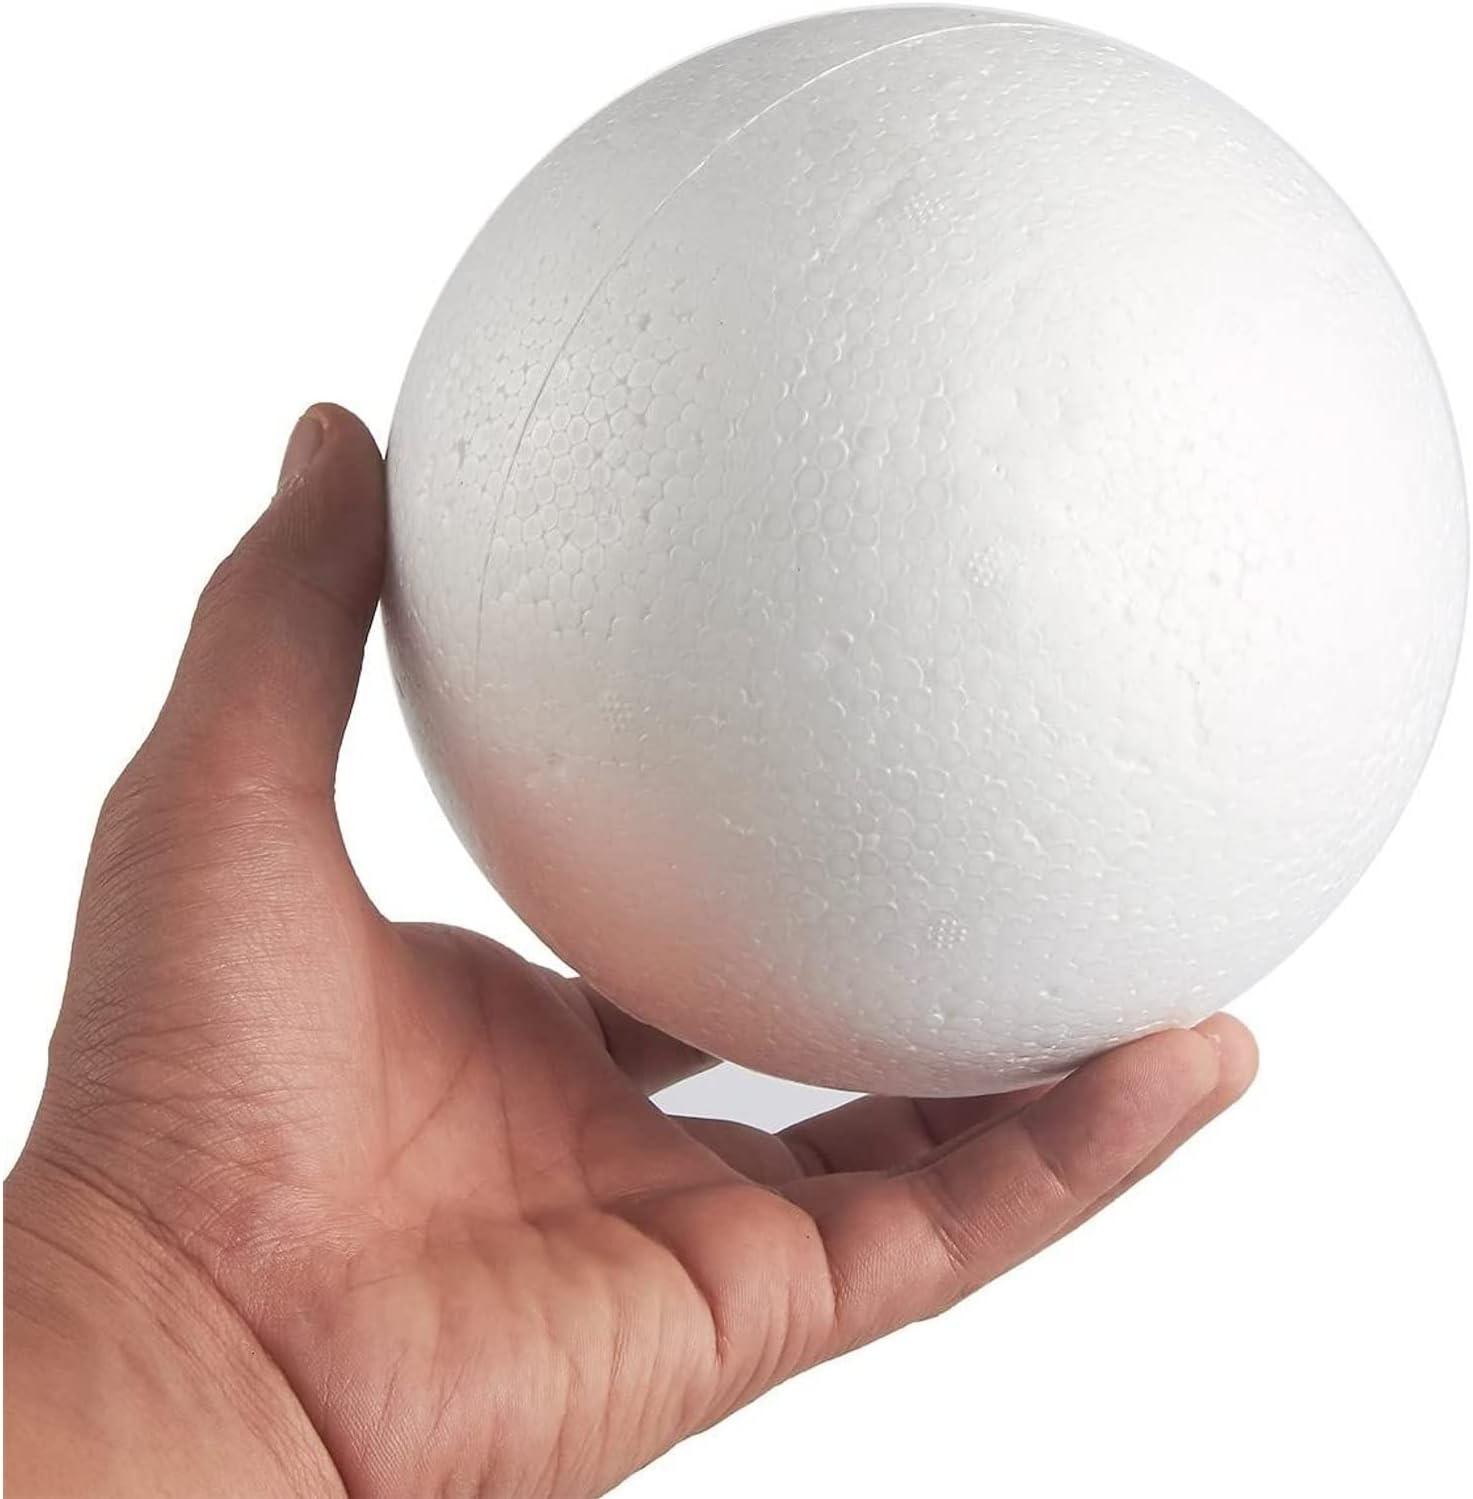 14 piece Half Round Foam Styrofoam Polystyrene Ball (6 Inch) for Crafting  Painting Drawing